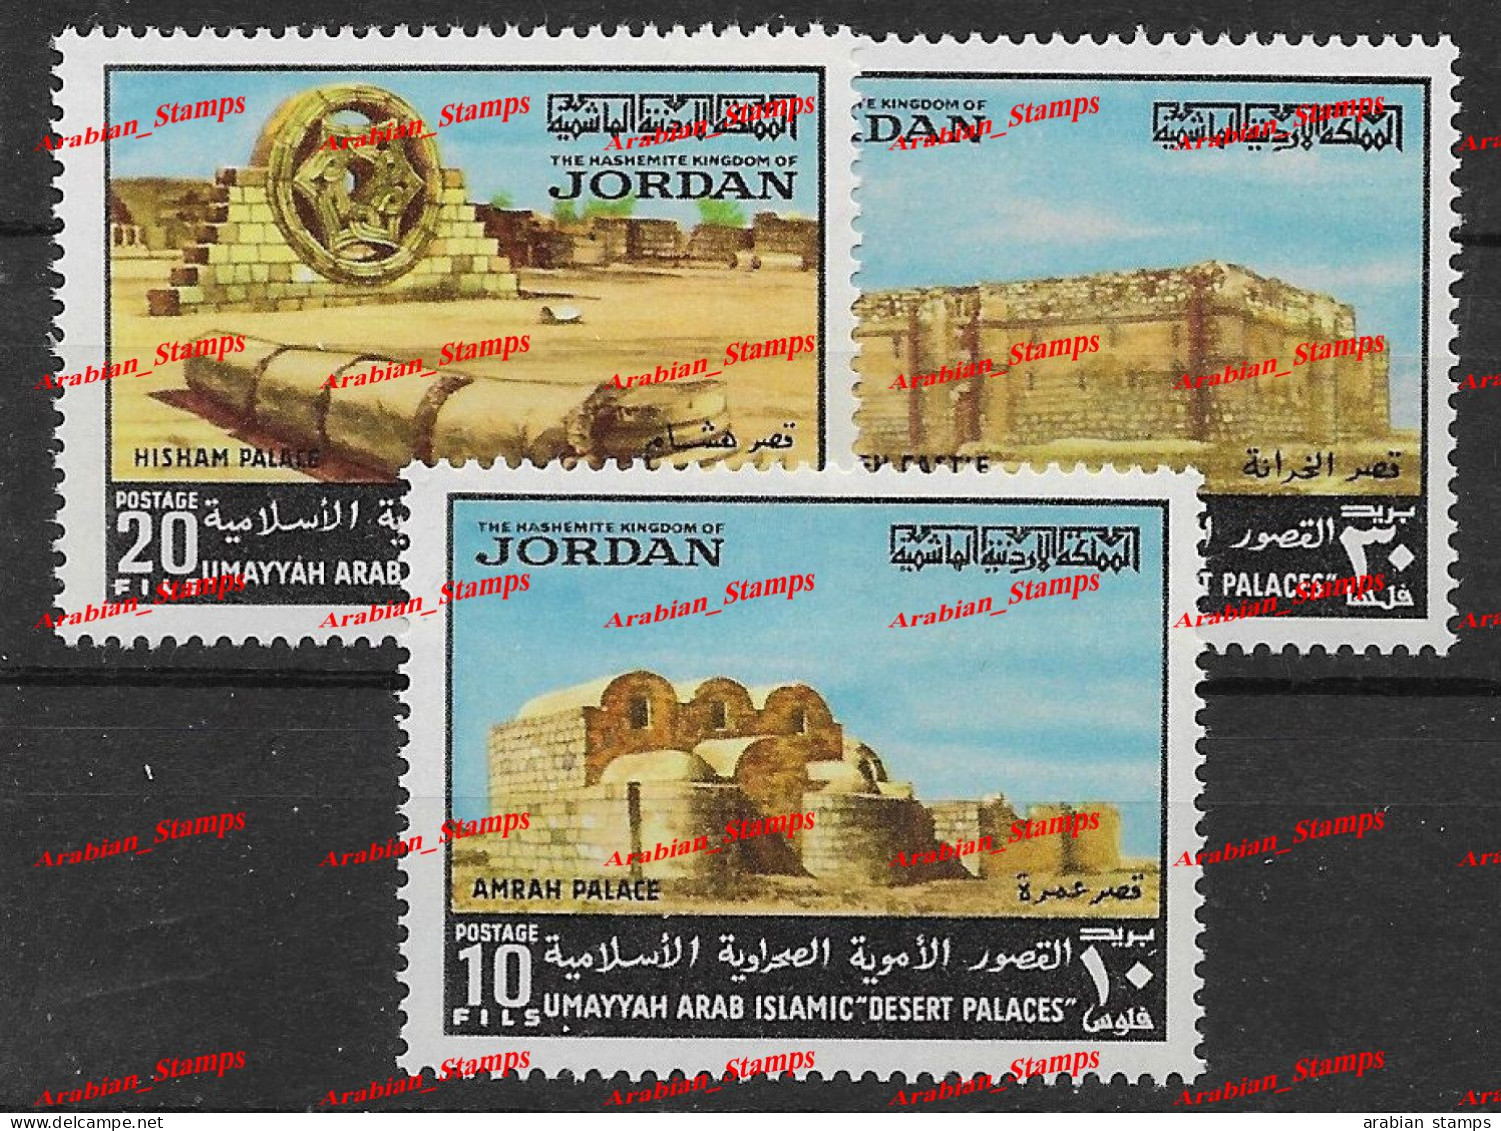 HASHIMATE KINGDOM OF JORDAN JORDANIE 1974 MNH DESERT RUINS DESERT PALACES MONUMENTS AMRA PALACE KHARRANEH CASTLE - Giordania